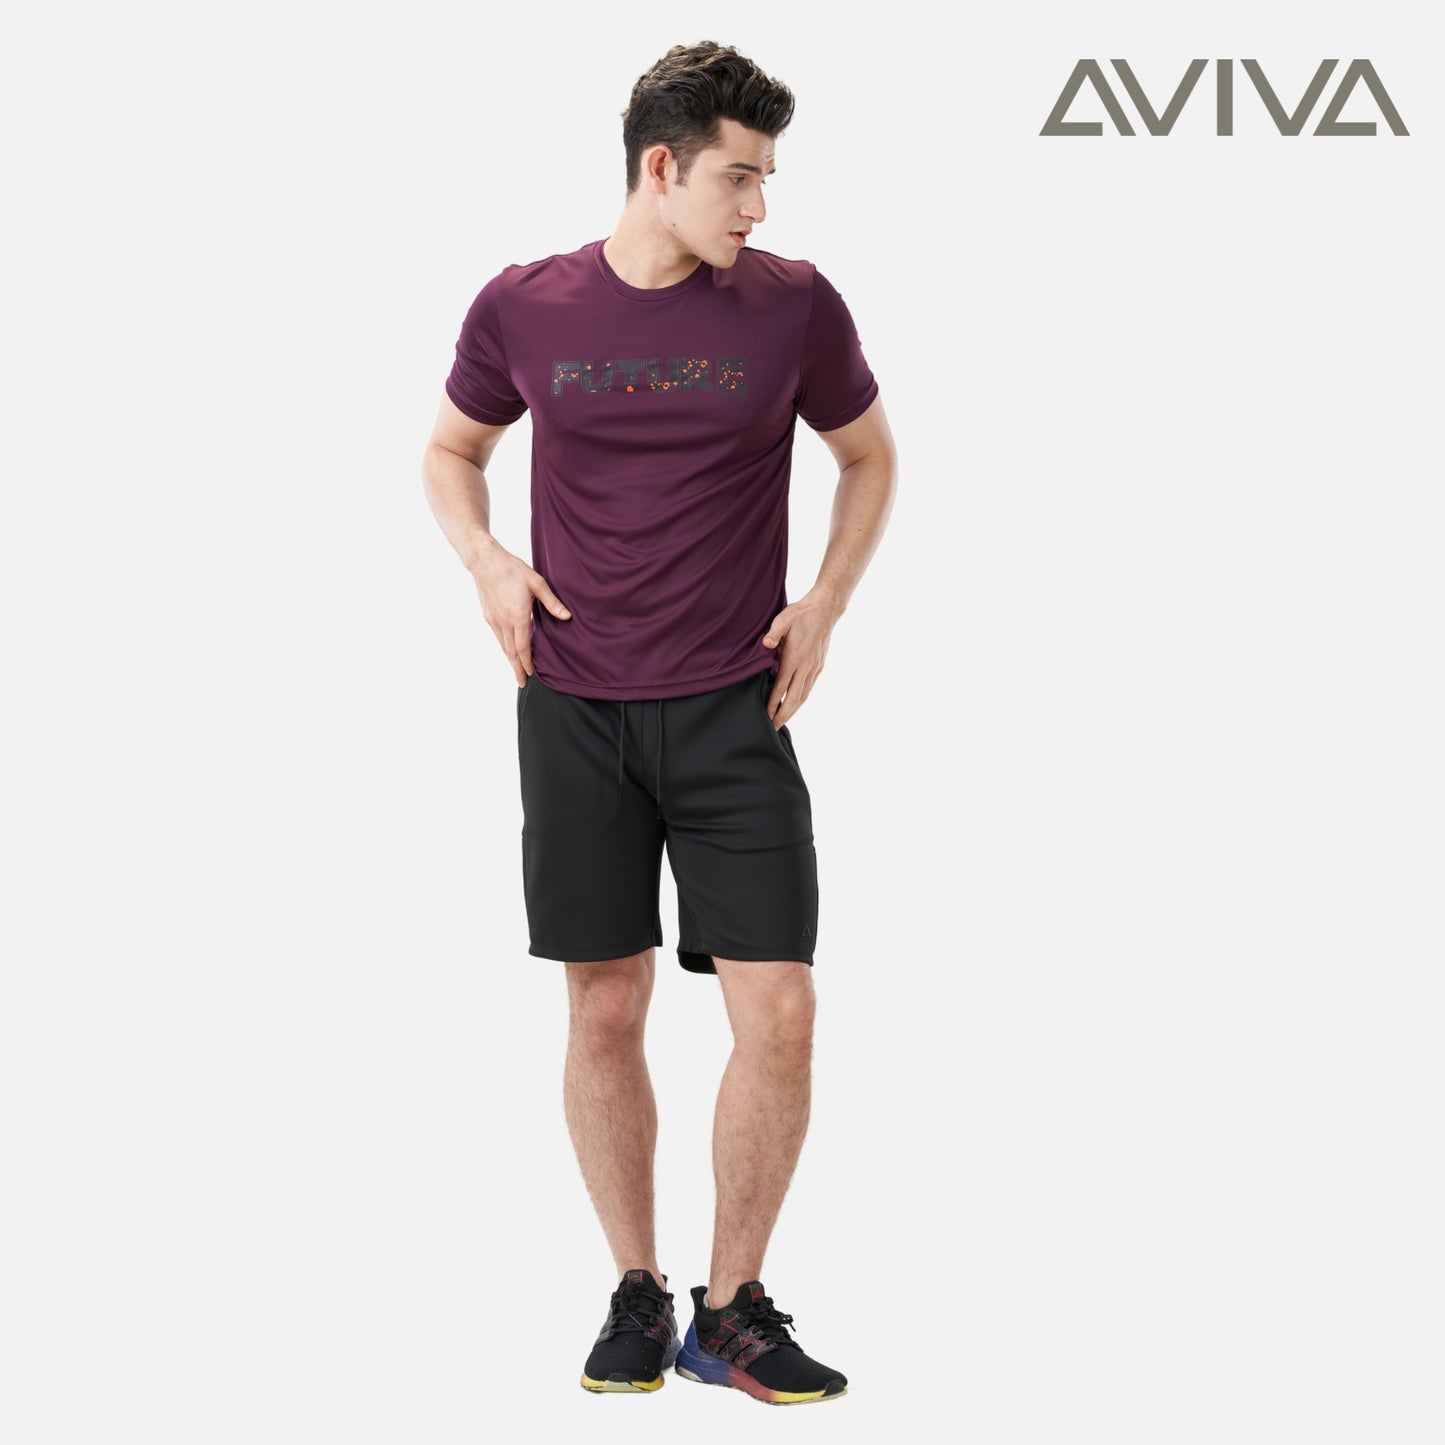 AVIVA Men's Graphic Short Sleeve Tee (91-8050)